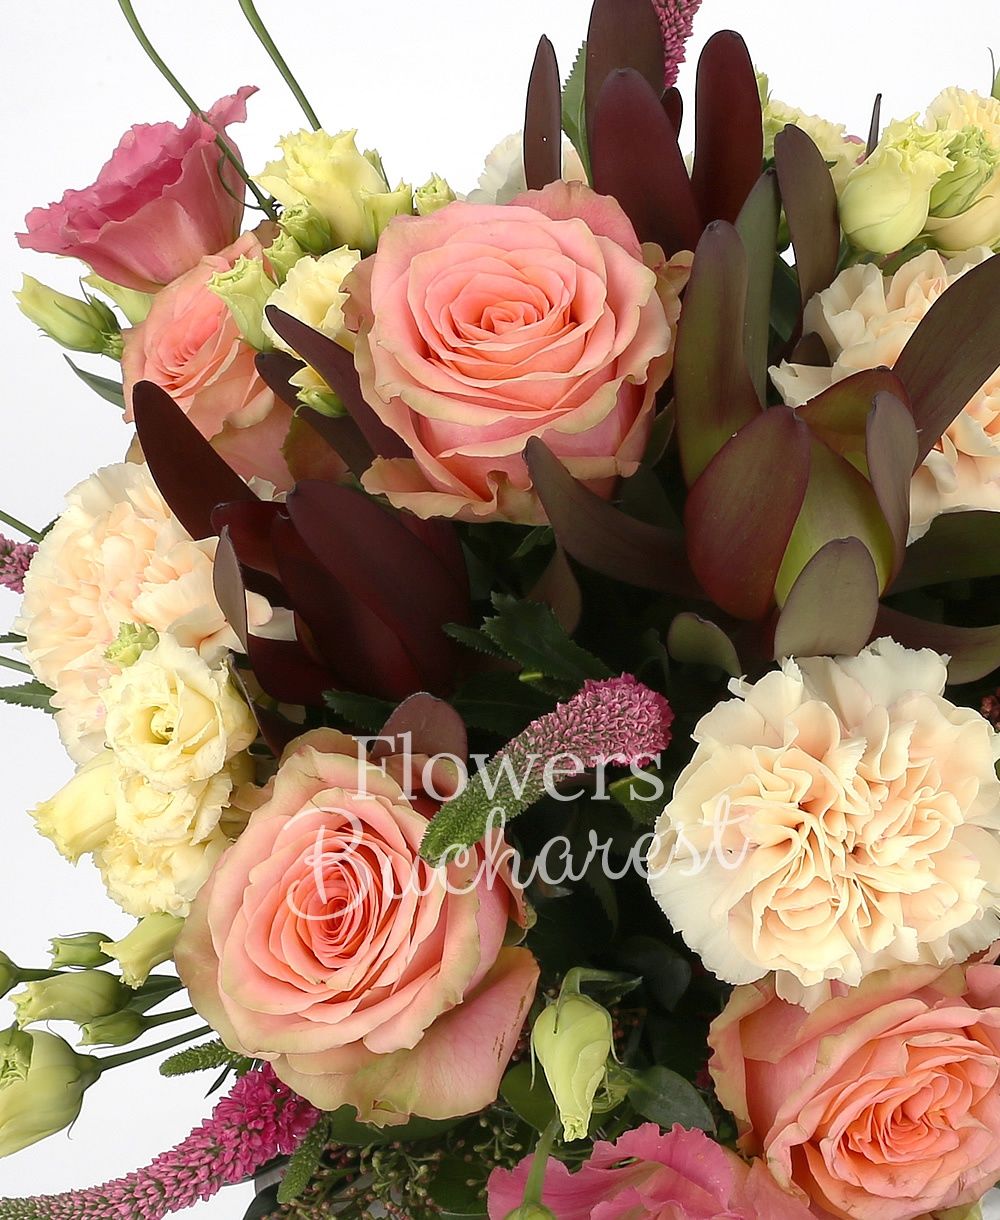 5 orange roses, 3 pink lisianthus, 5 cream carnations, 5 red veronica, 3 leucadendron, 3 schimia, greenery